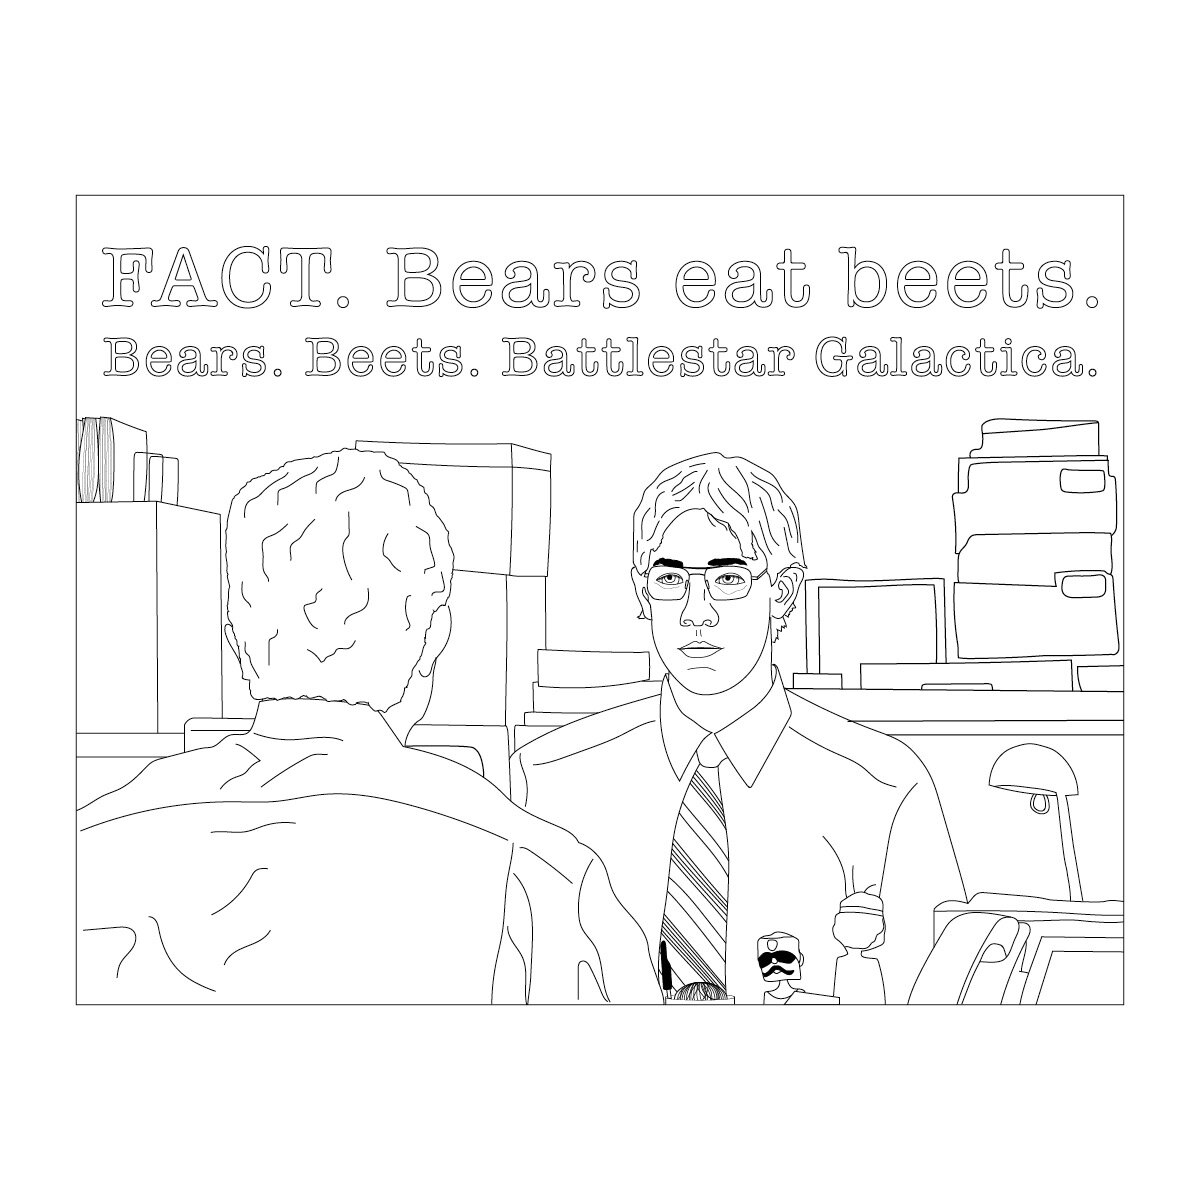 Bears Beets Battlestar Galactica.jpg